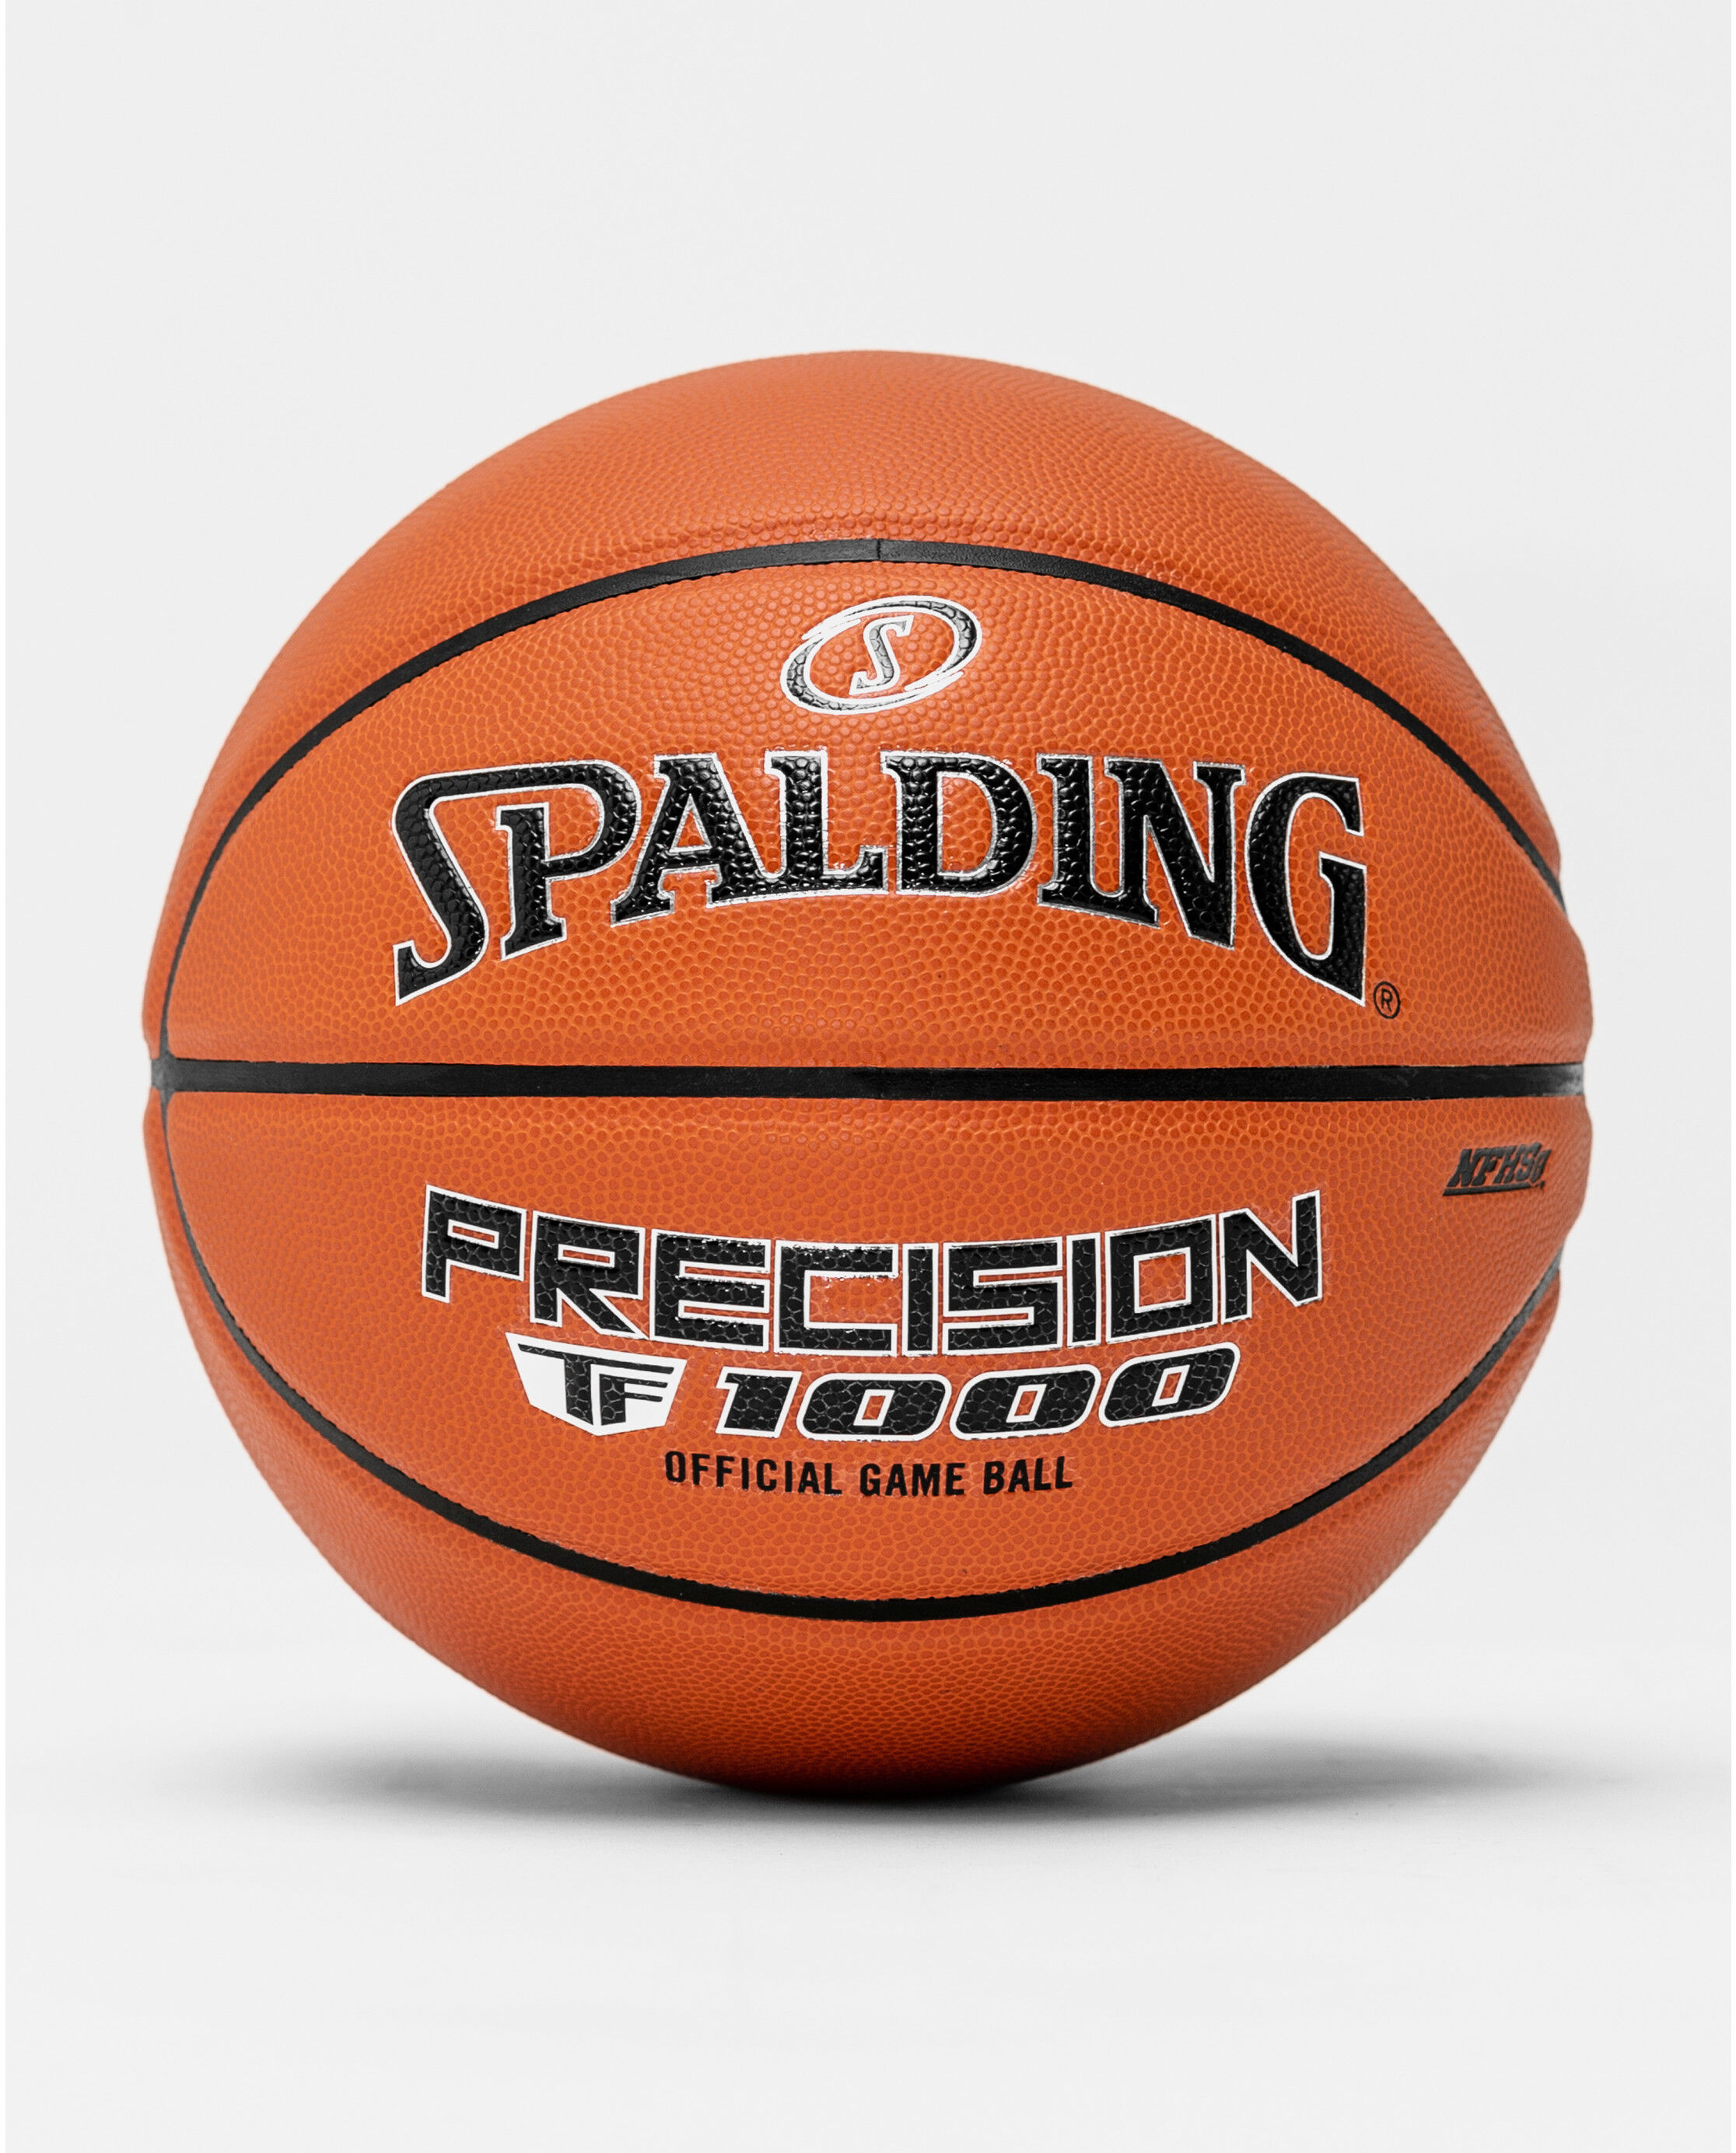 Spalding Precision TF-1000 Indoor Game Basketball I Spalding.com